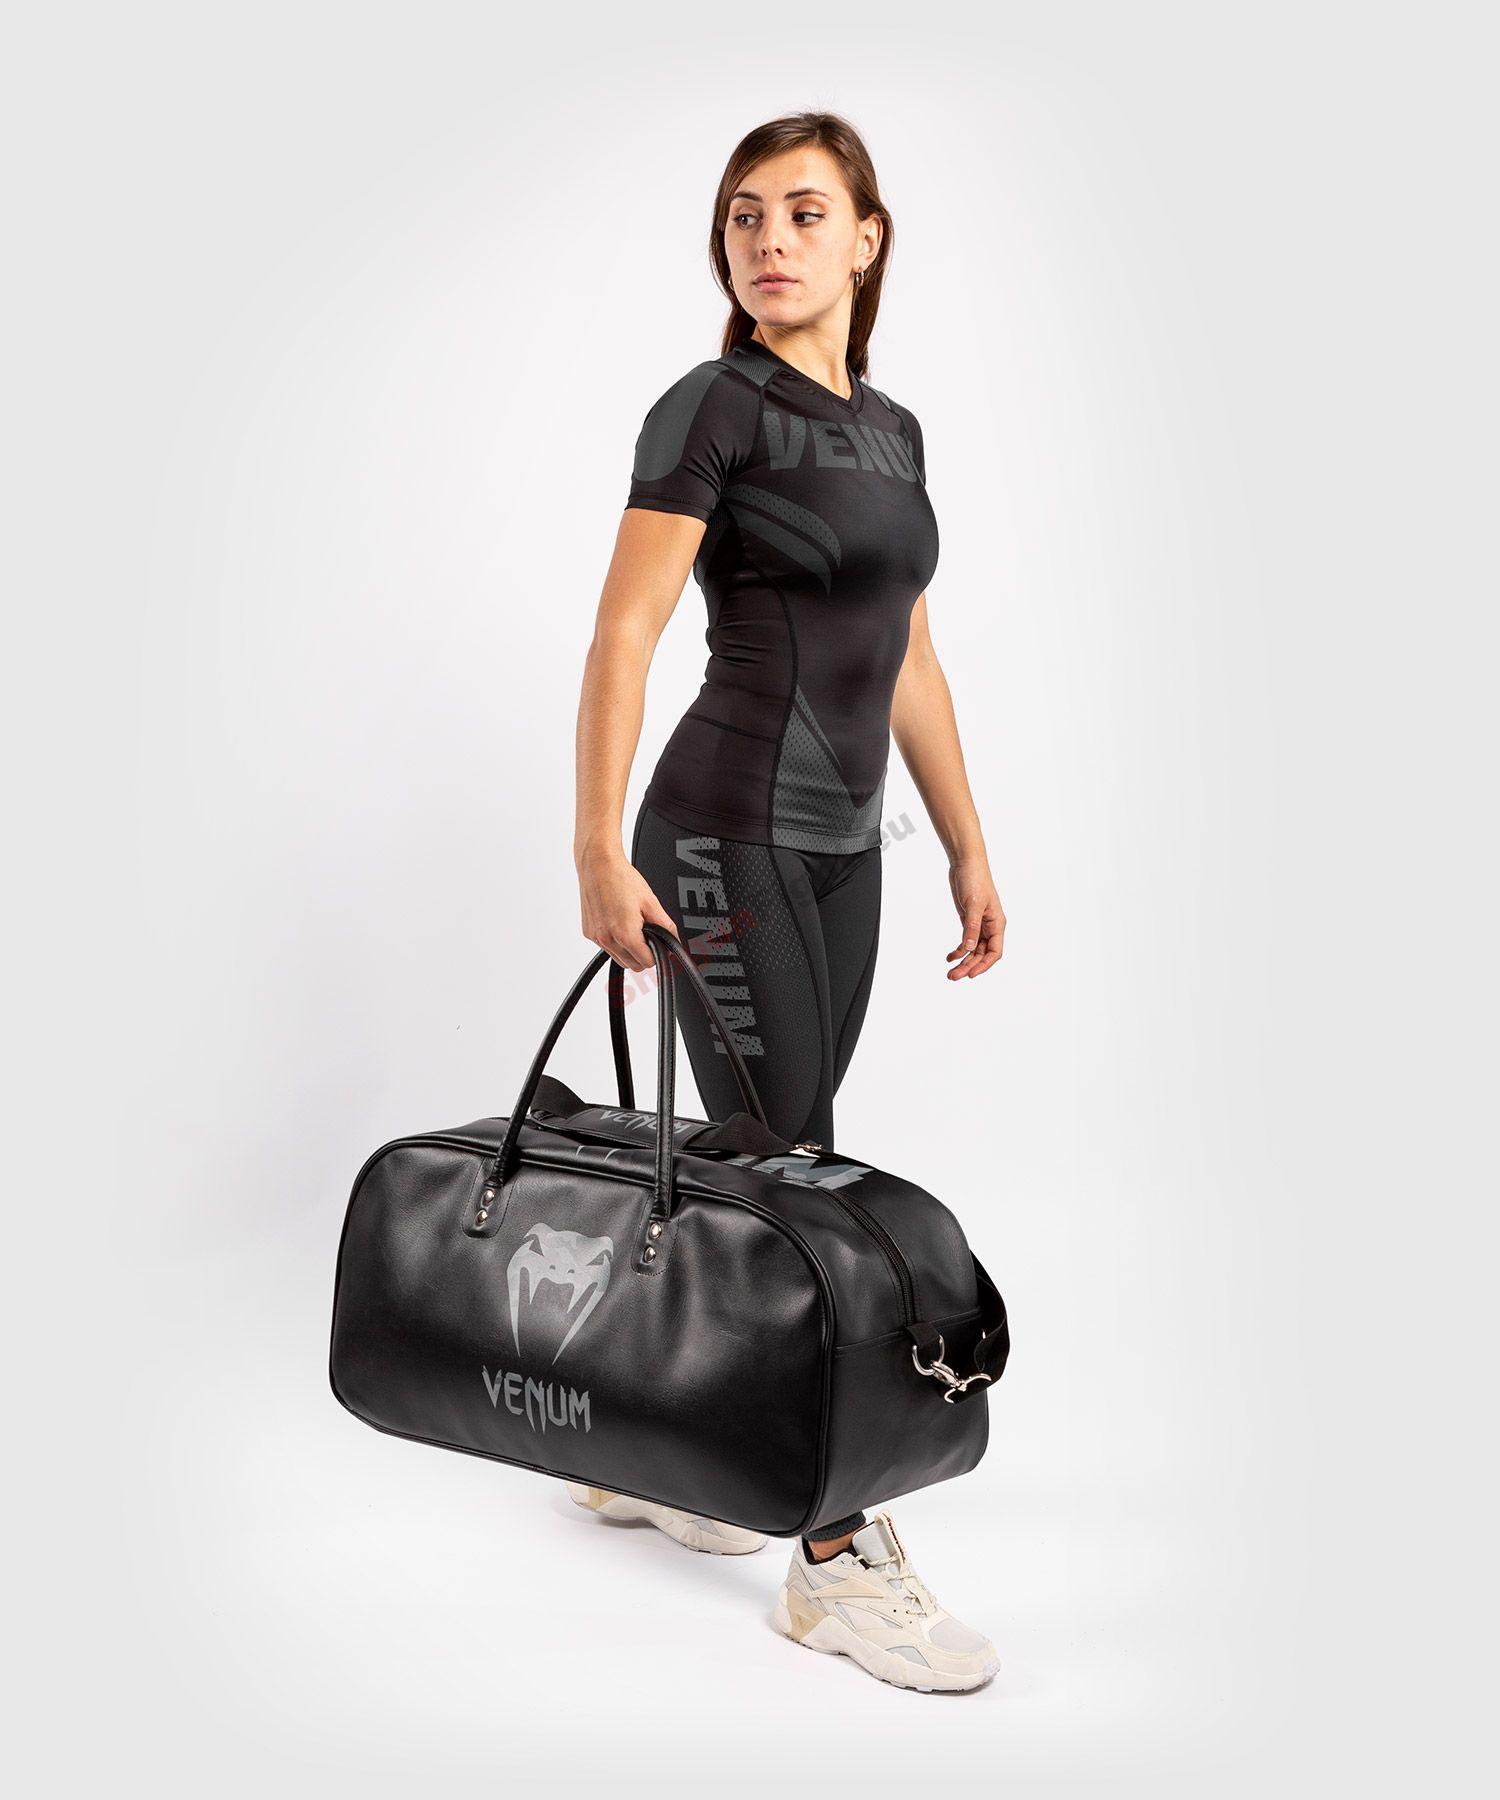 VENUM ORIGINS Műbőr táska - XL, Fekete/Urban camo 